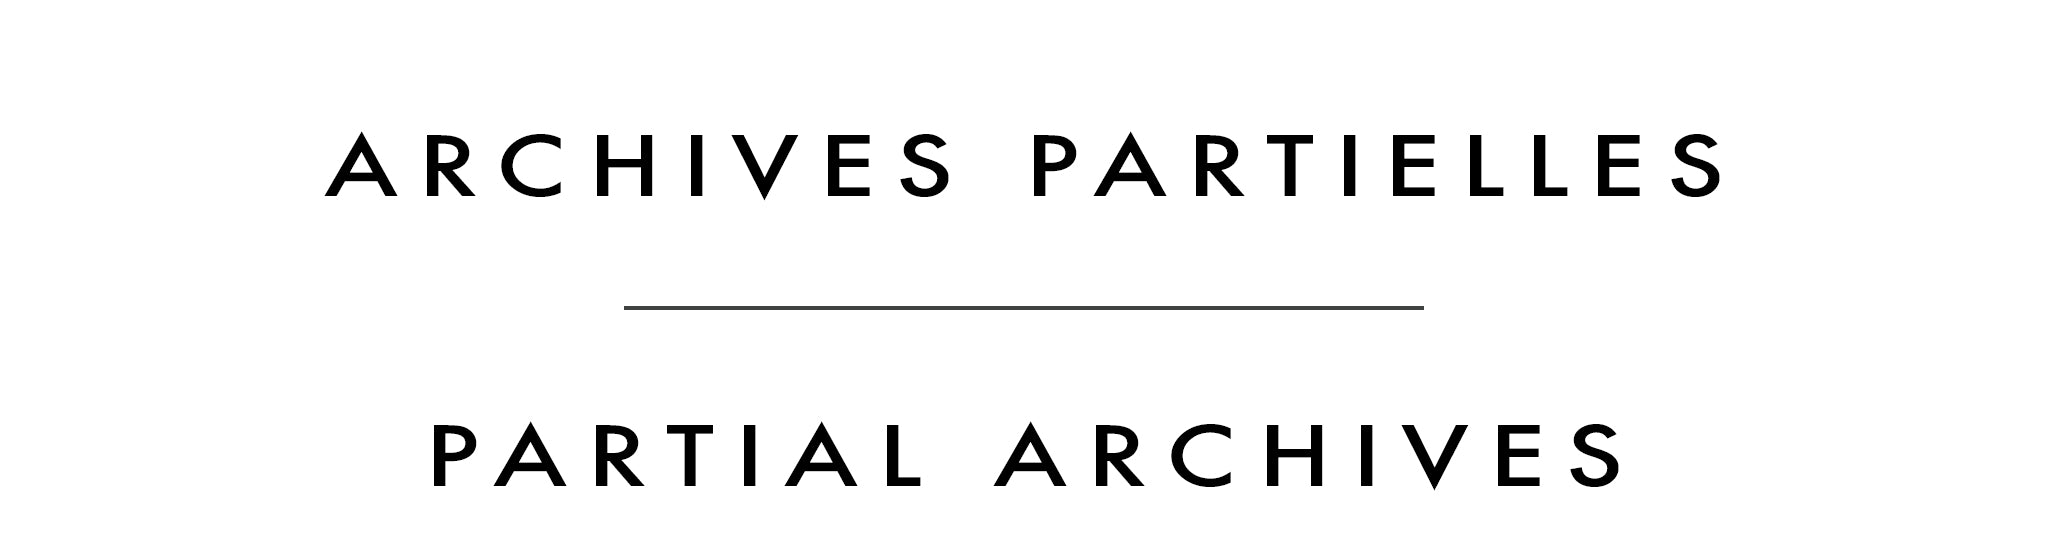 Archives partielles | Partial Archives | Angie Rees